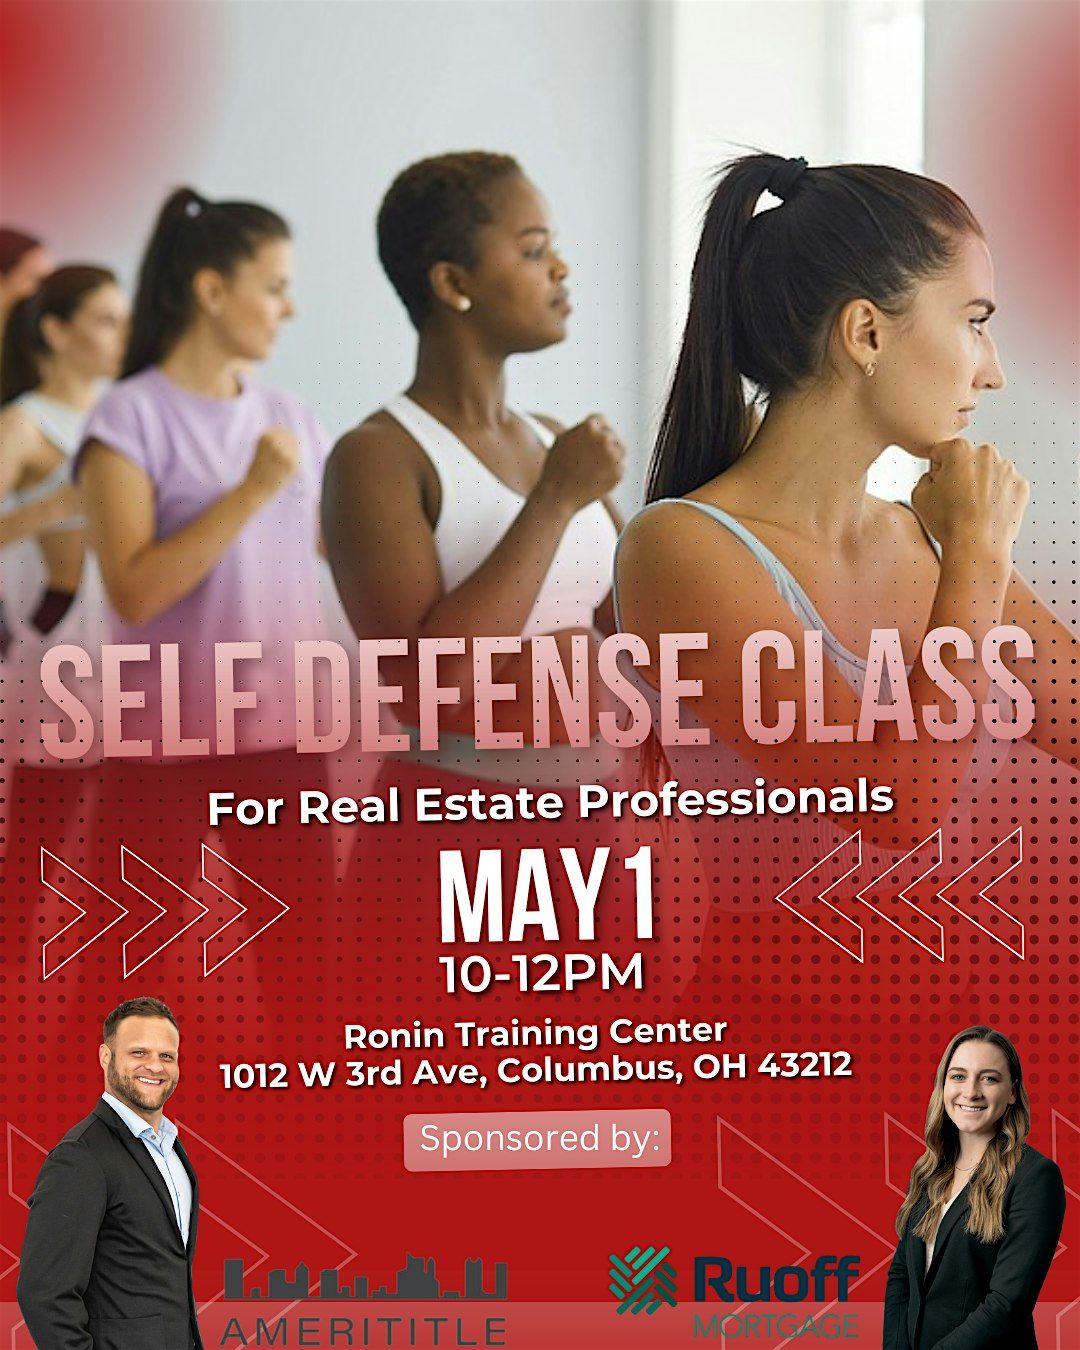 Self Defense Class - Real Estate Professionals